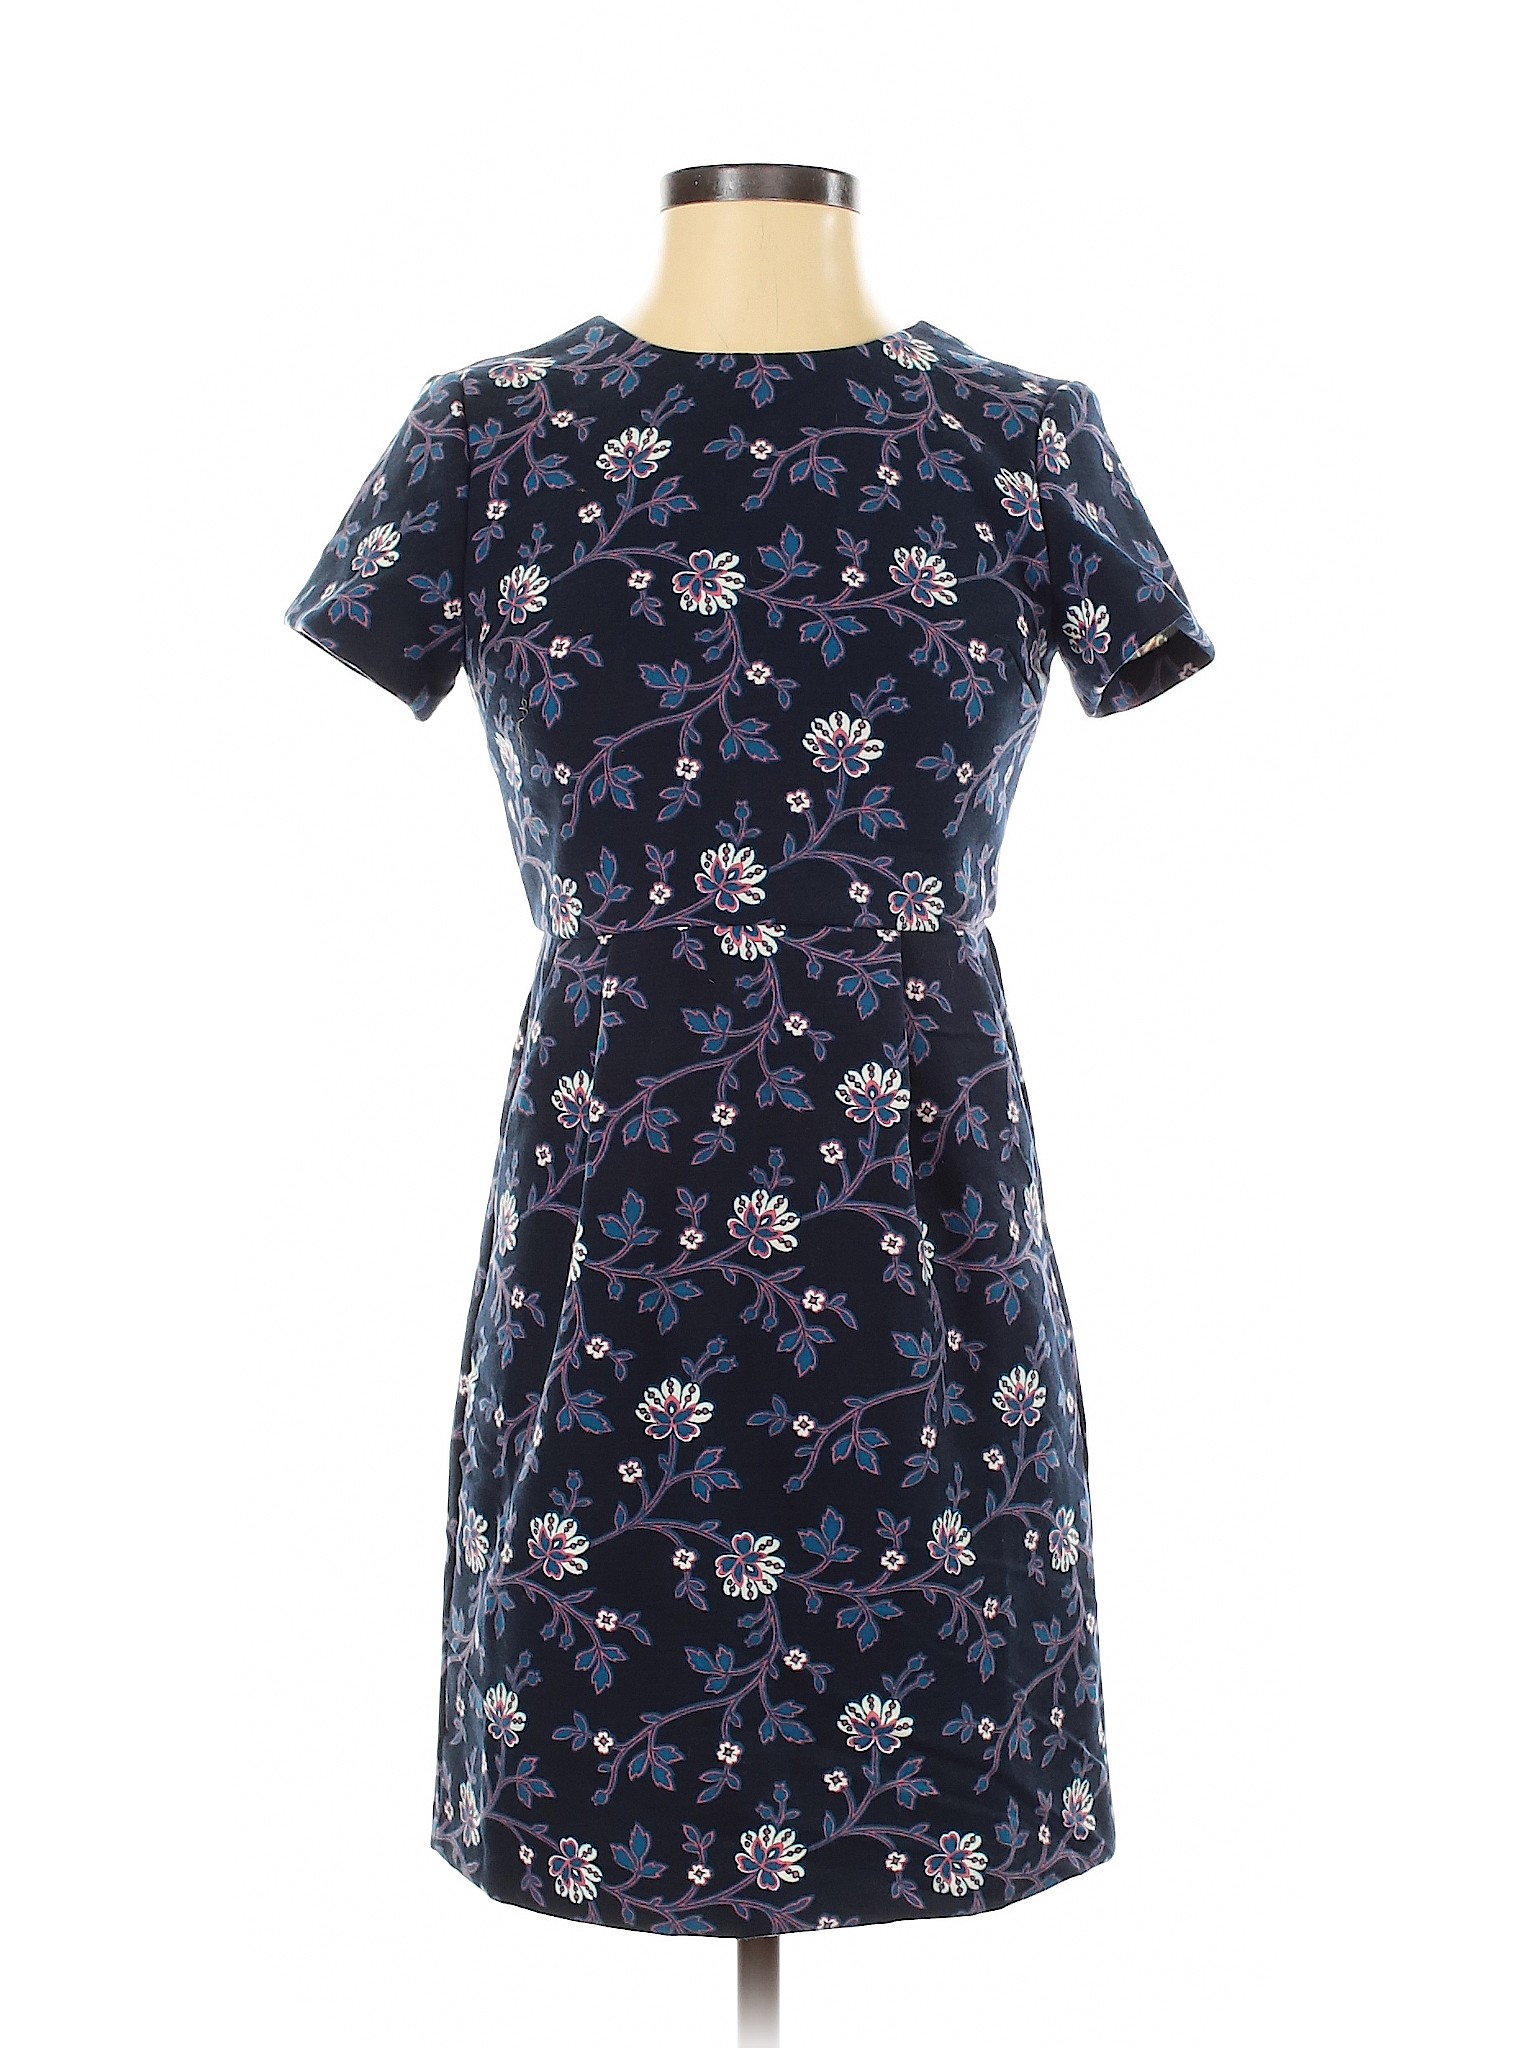 NWT Ann Taylor LOFT Women Blue Casual Dress 00 Petites | eBay